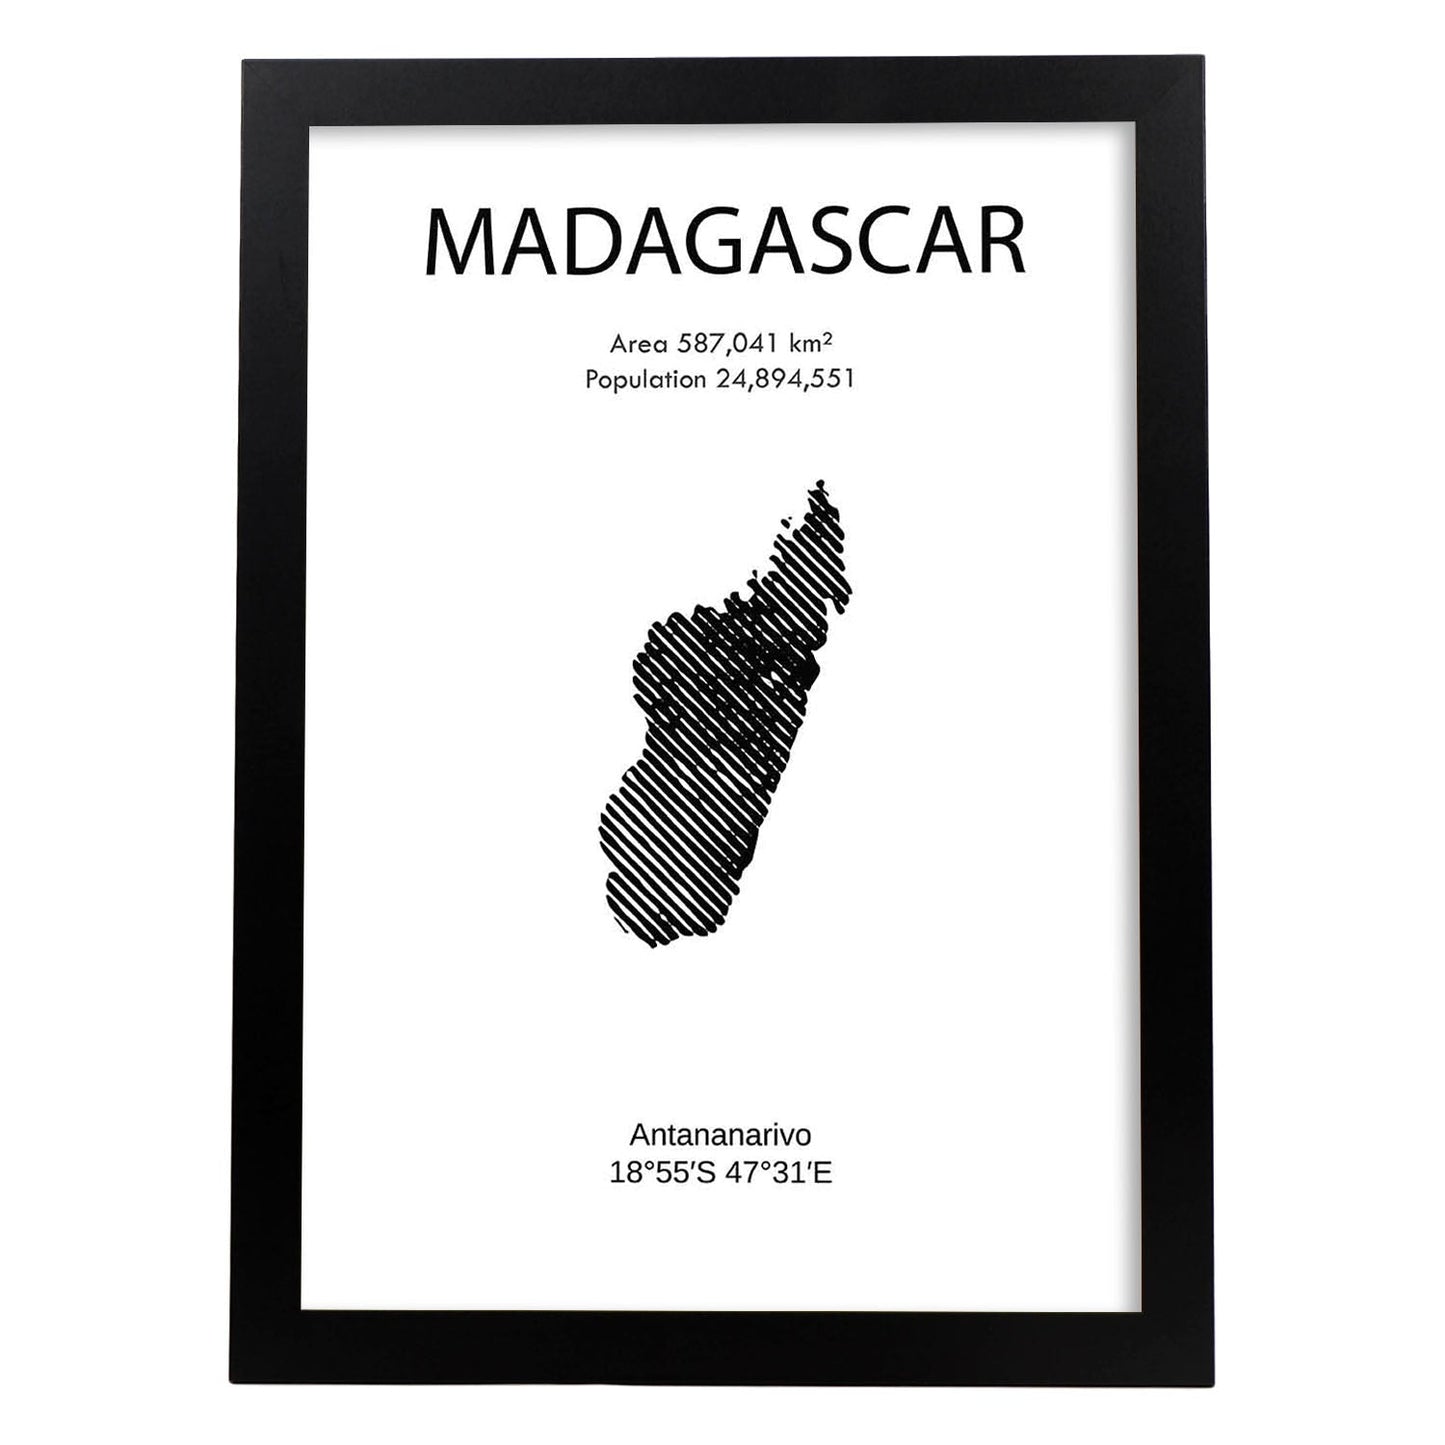 Poster de Madagascar. Láminas de paises y continentes del mundo.-Artwork-Nacnic-A3-Marco Negro-Nacnic Estudio SL